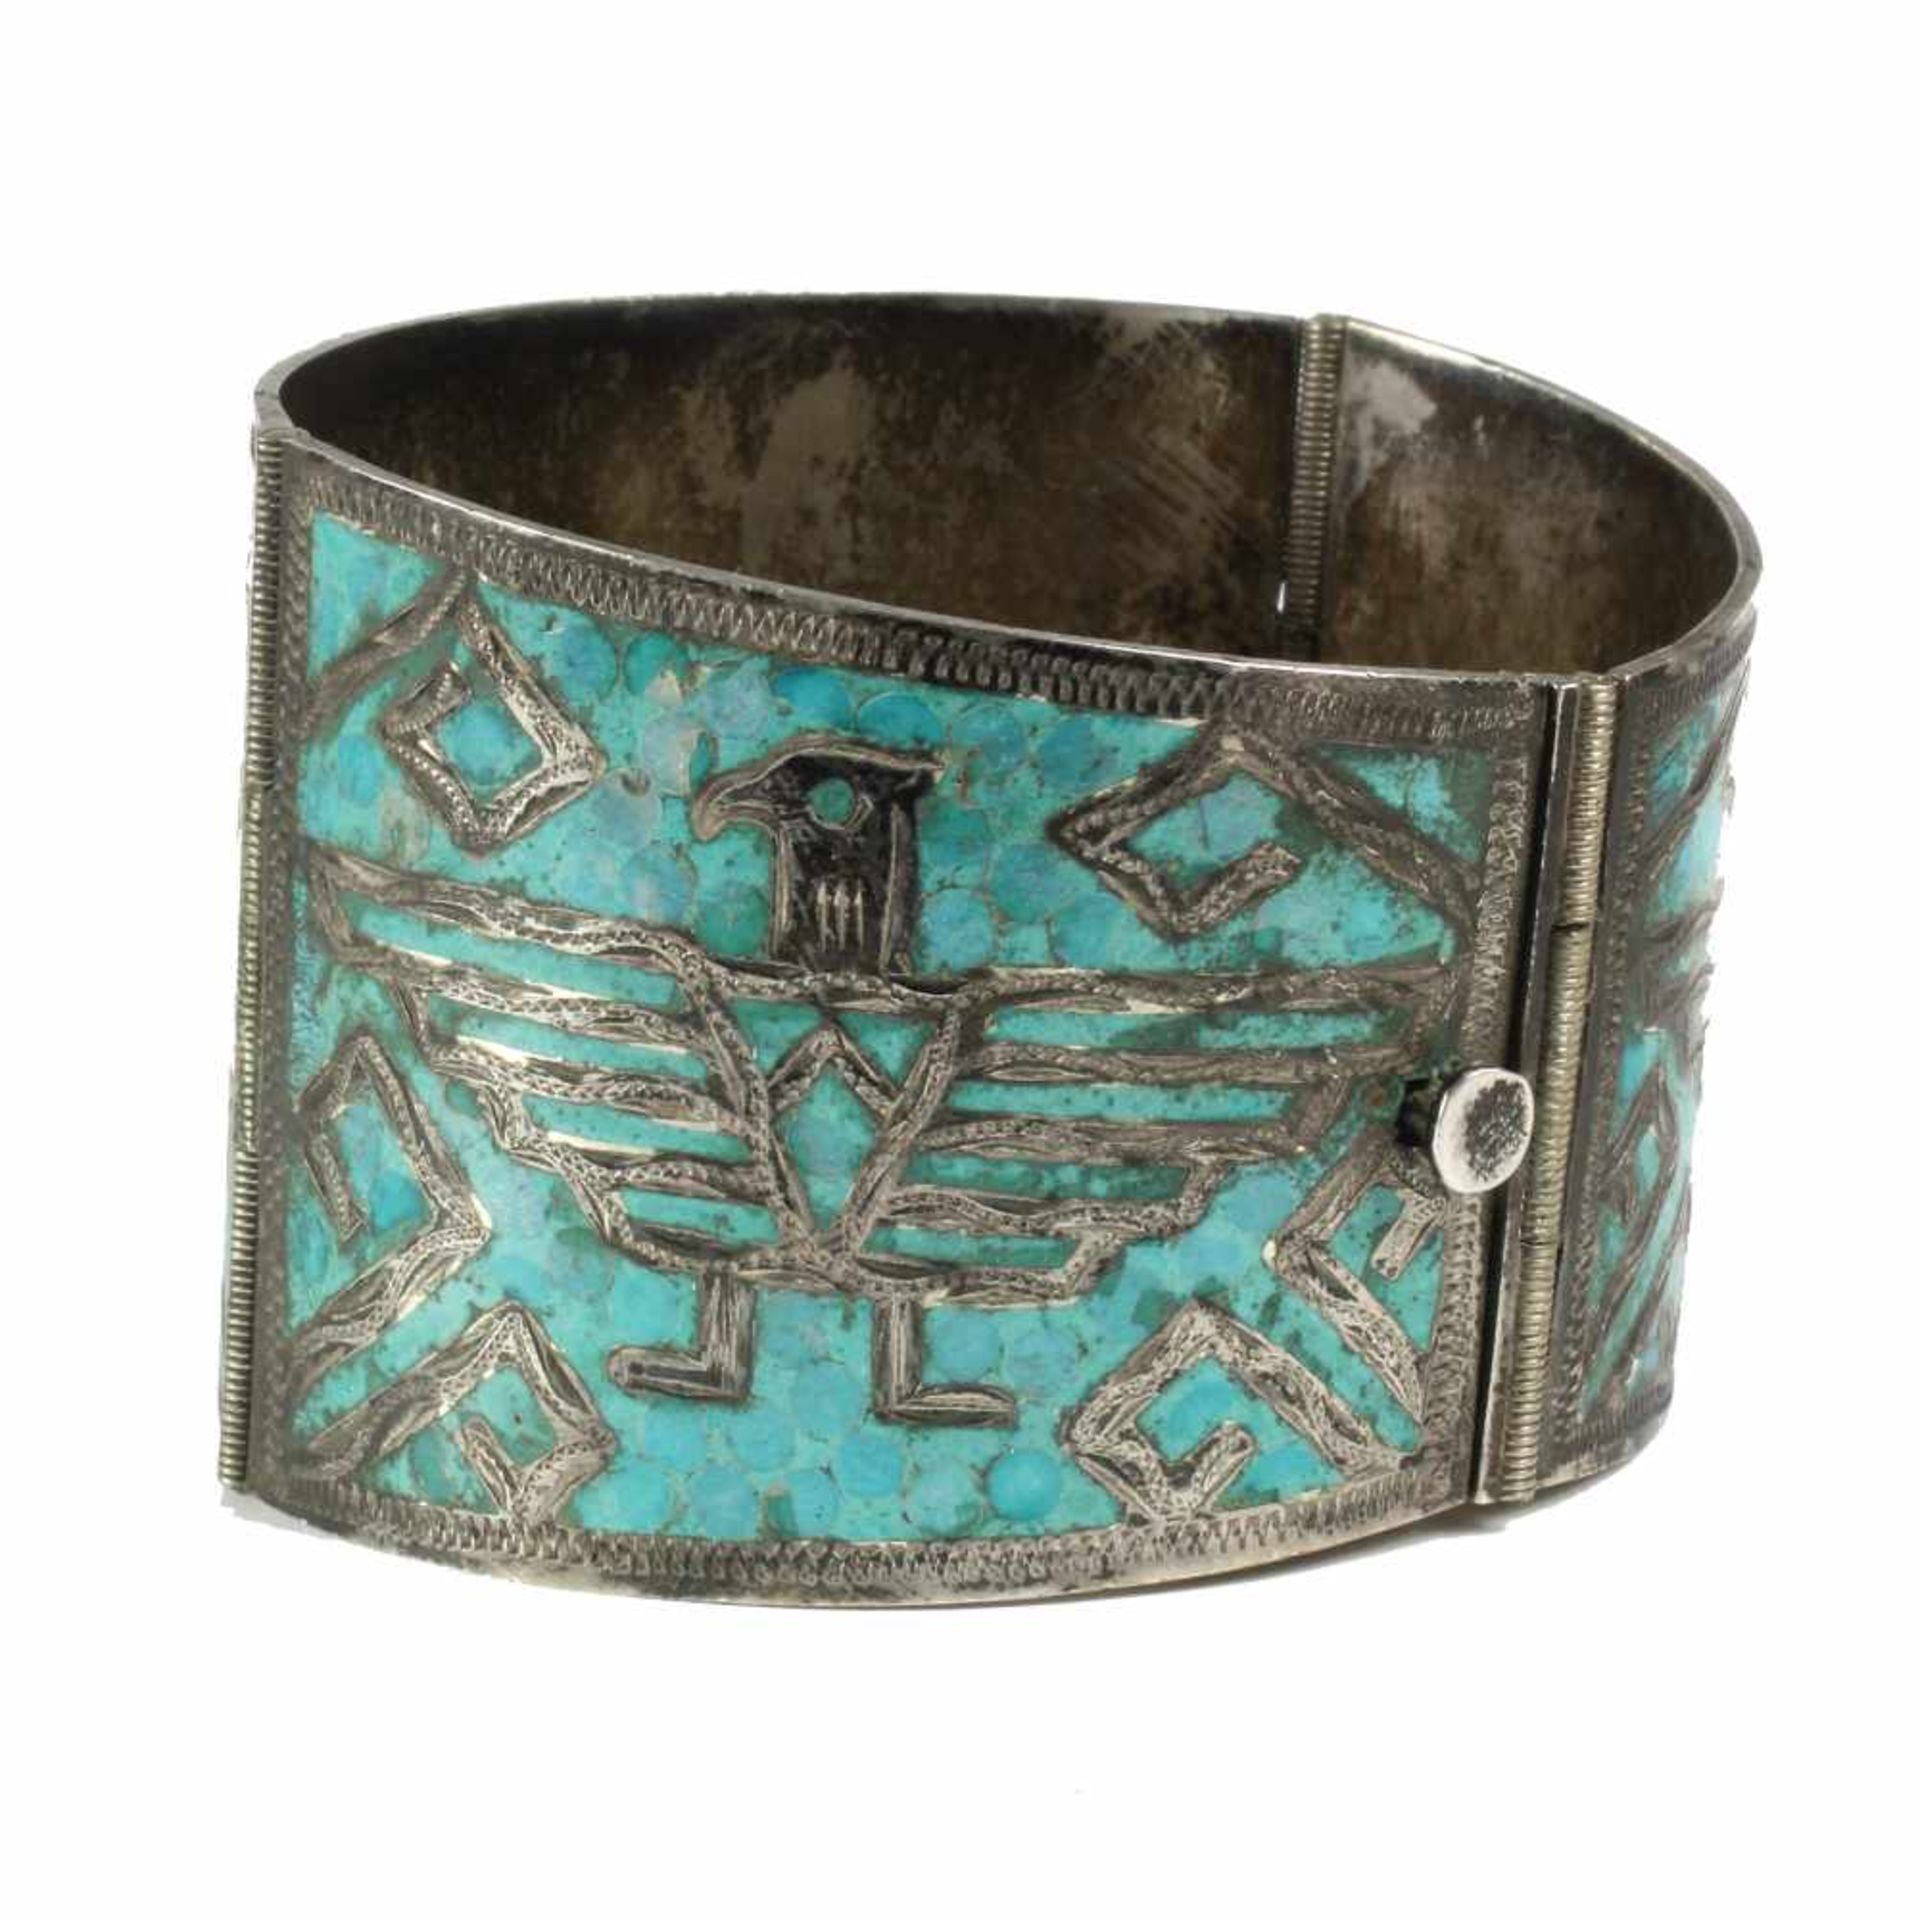 Dekoratives Armband, "MEXICO" 1950er Jahre, Silber 925/000, sig. STERLING MEXICO 0925 RS…, Azteken - Bild 2 aus 2